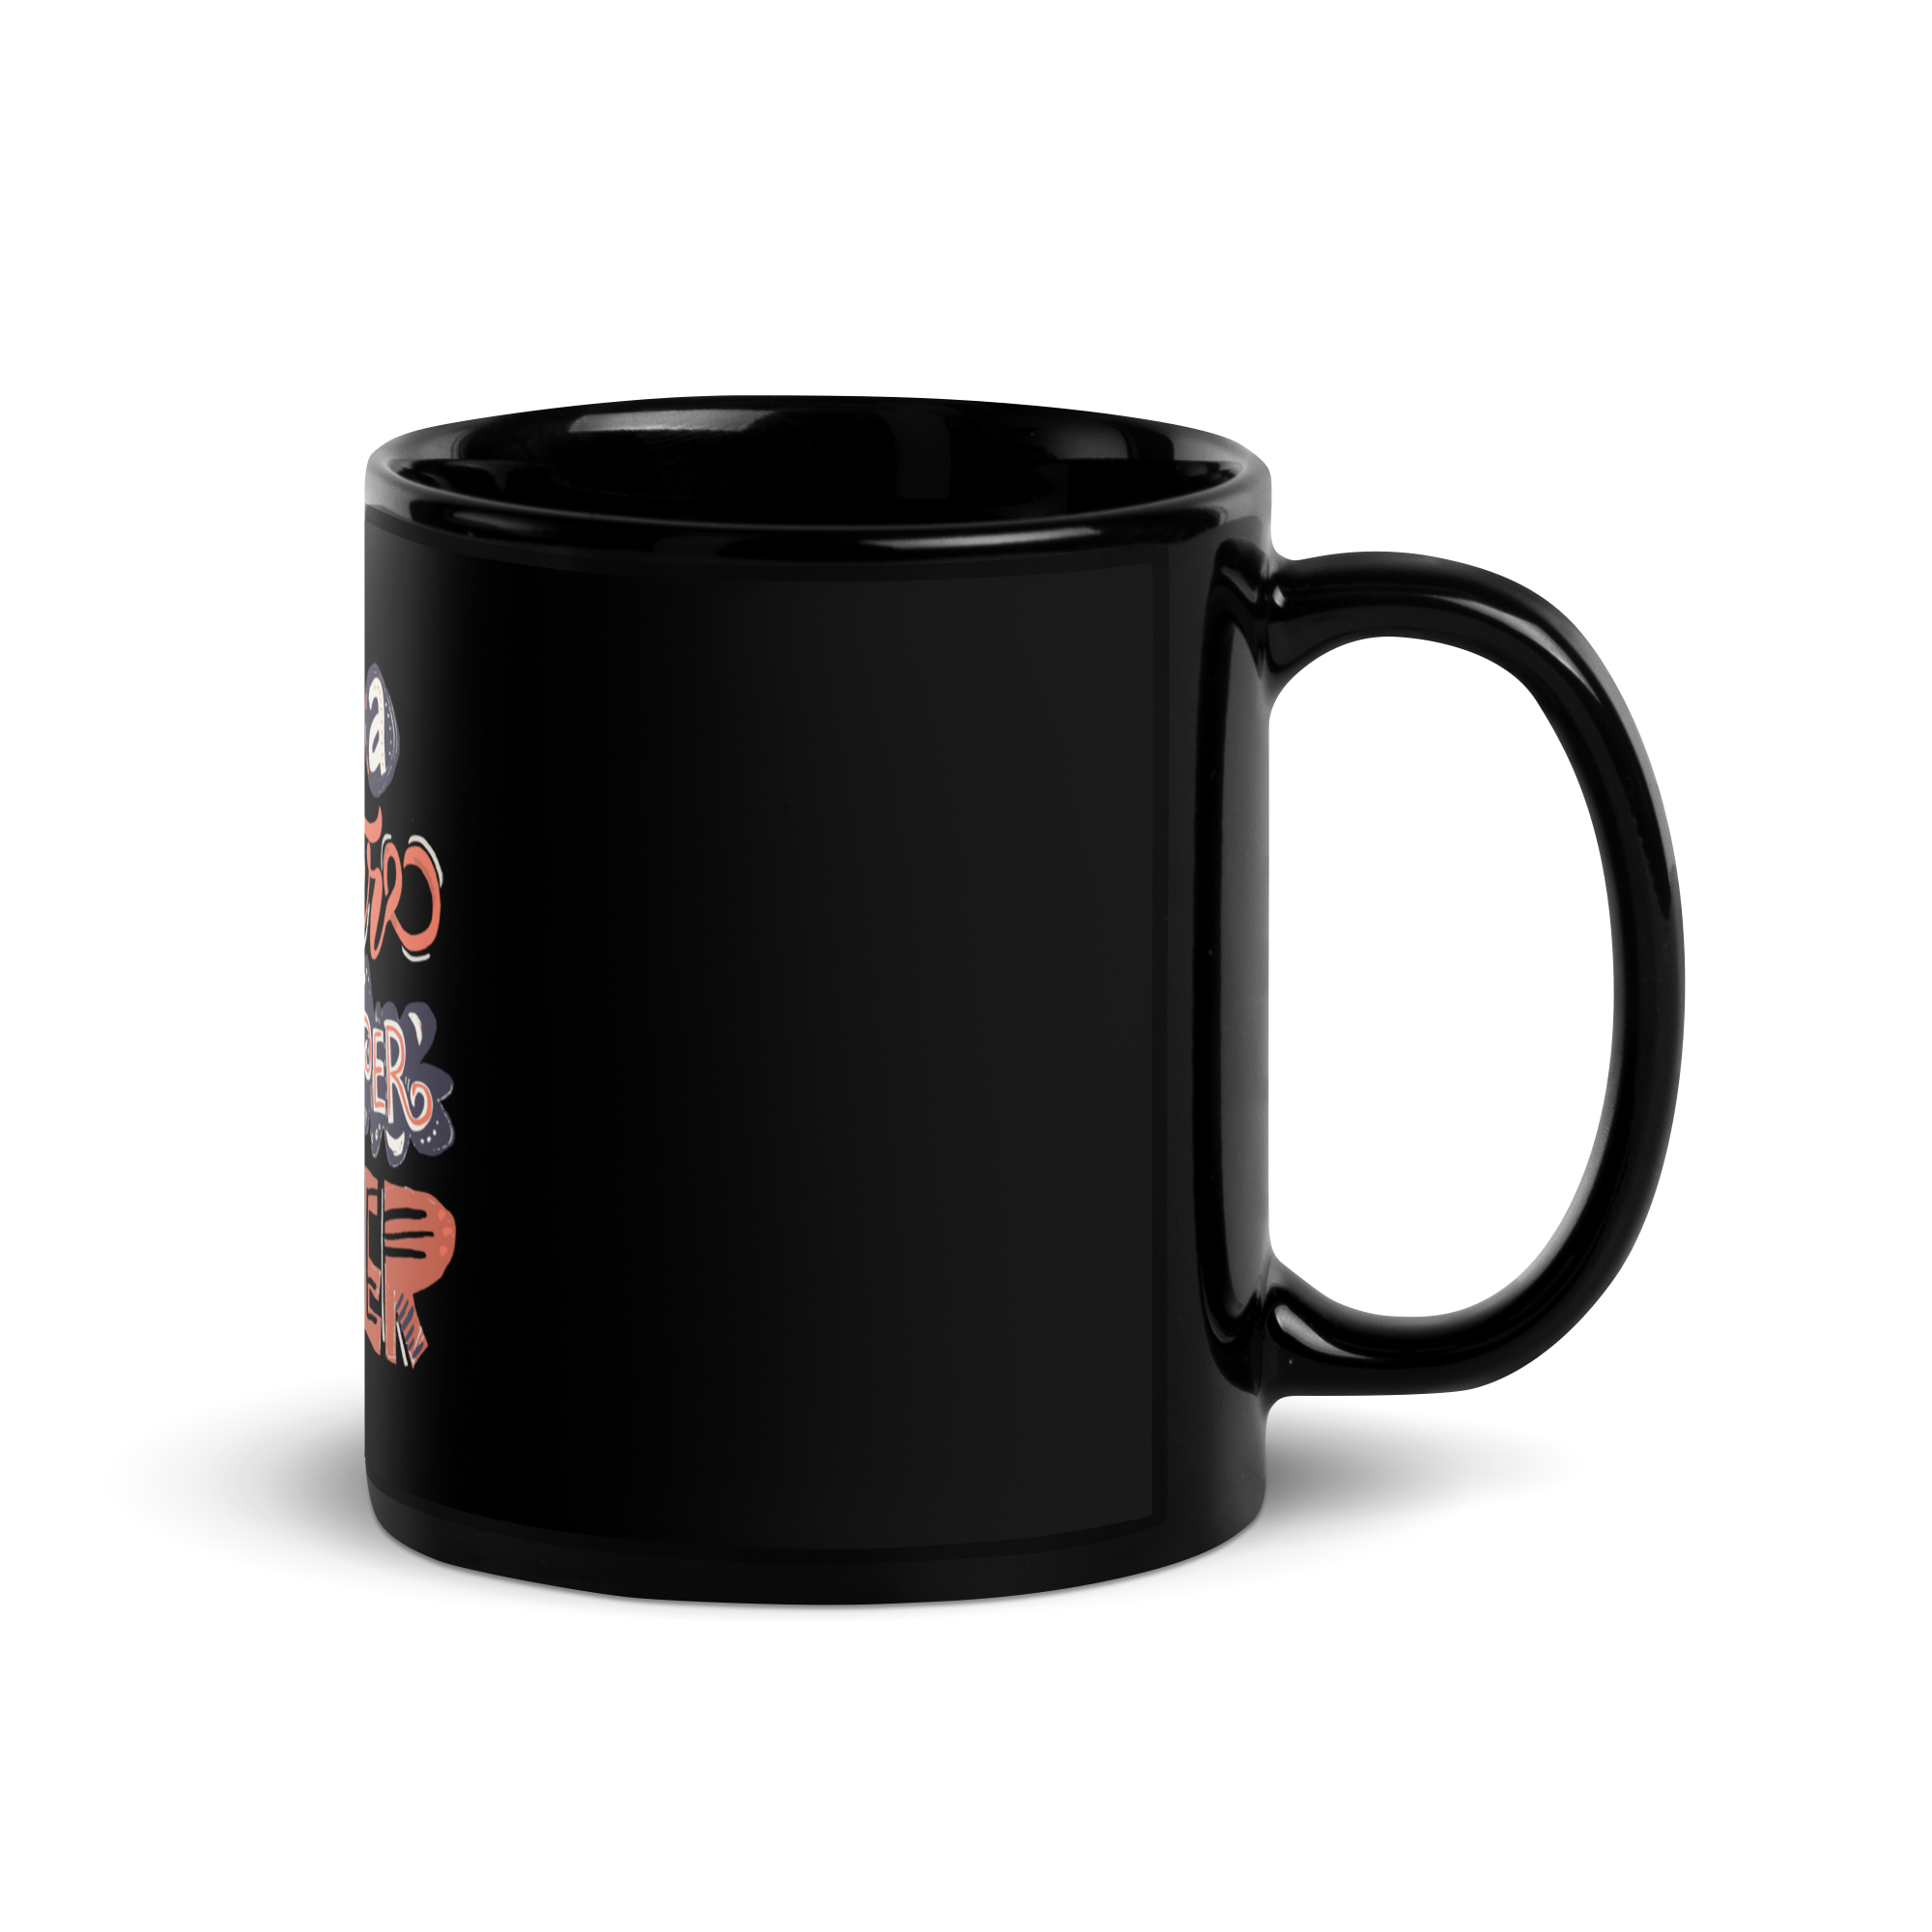 Excellent Black Glossy Mug